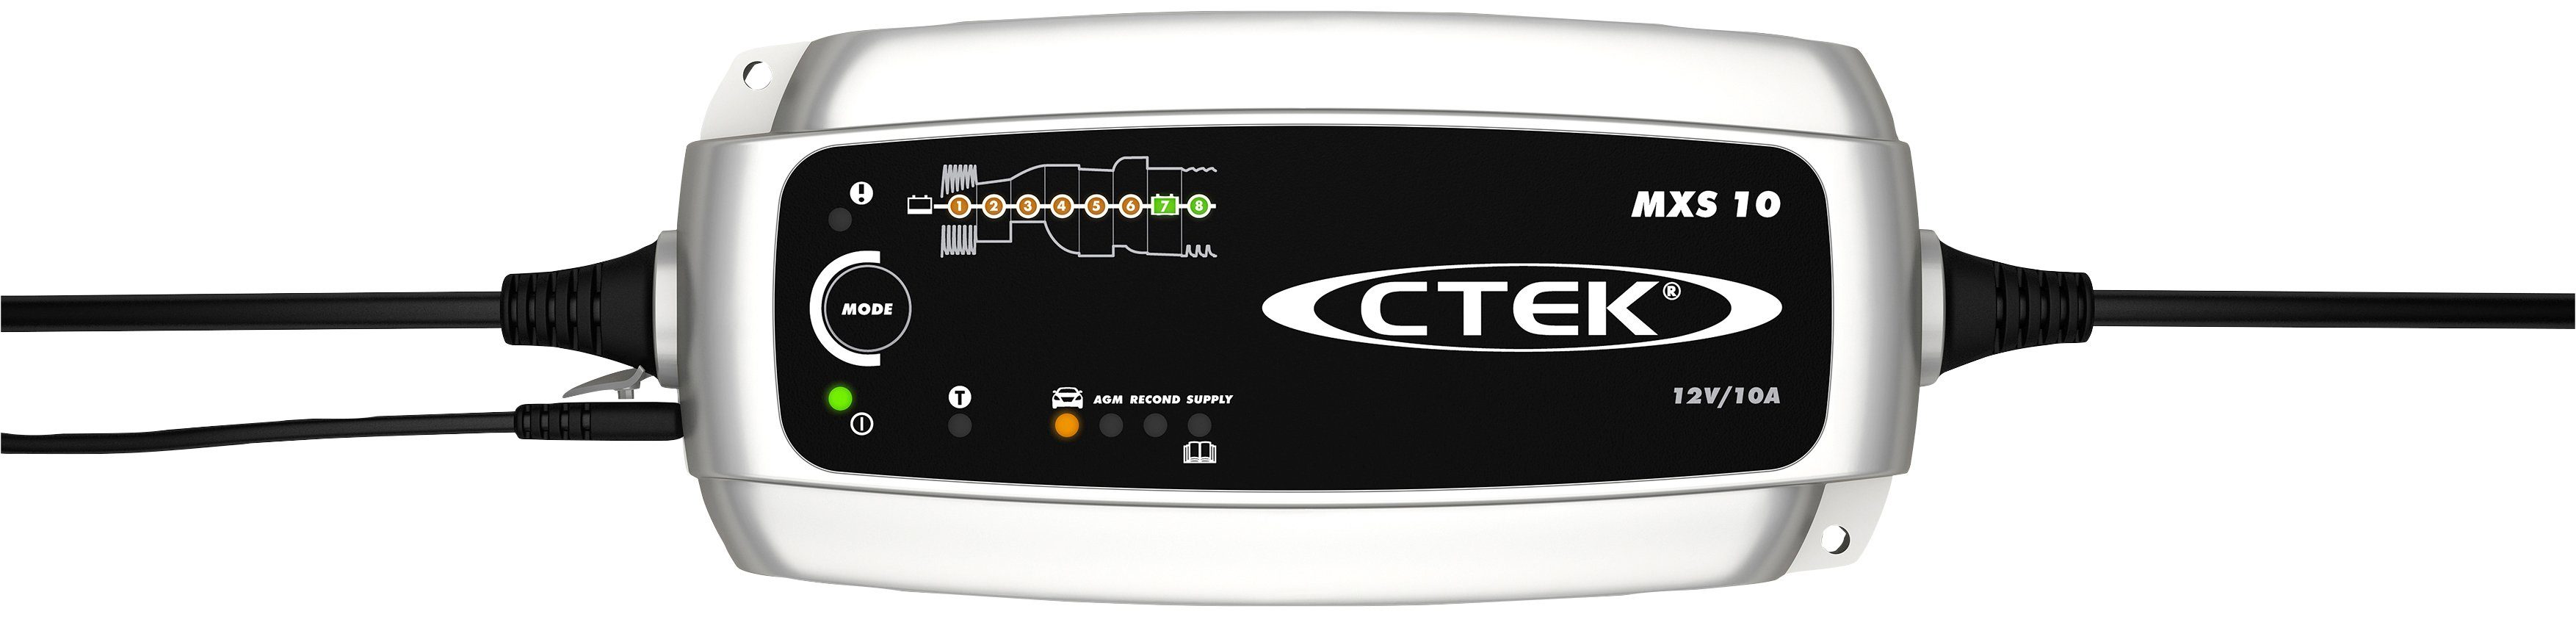 CTEK 10 MXS (Versorgungsprogramm / Supply-Modus) Batterie-Ladegerät